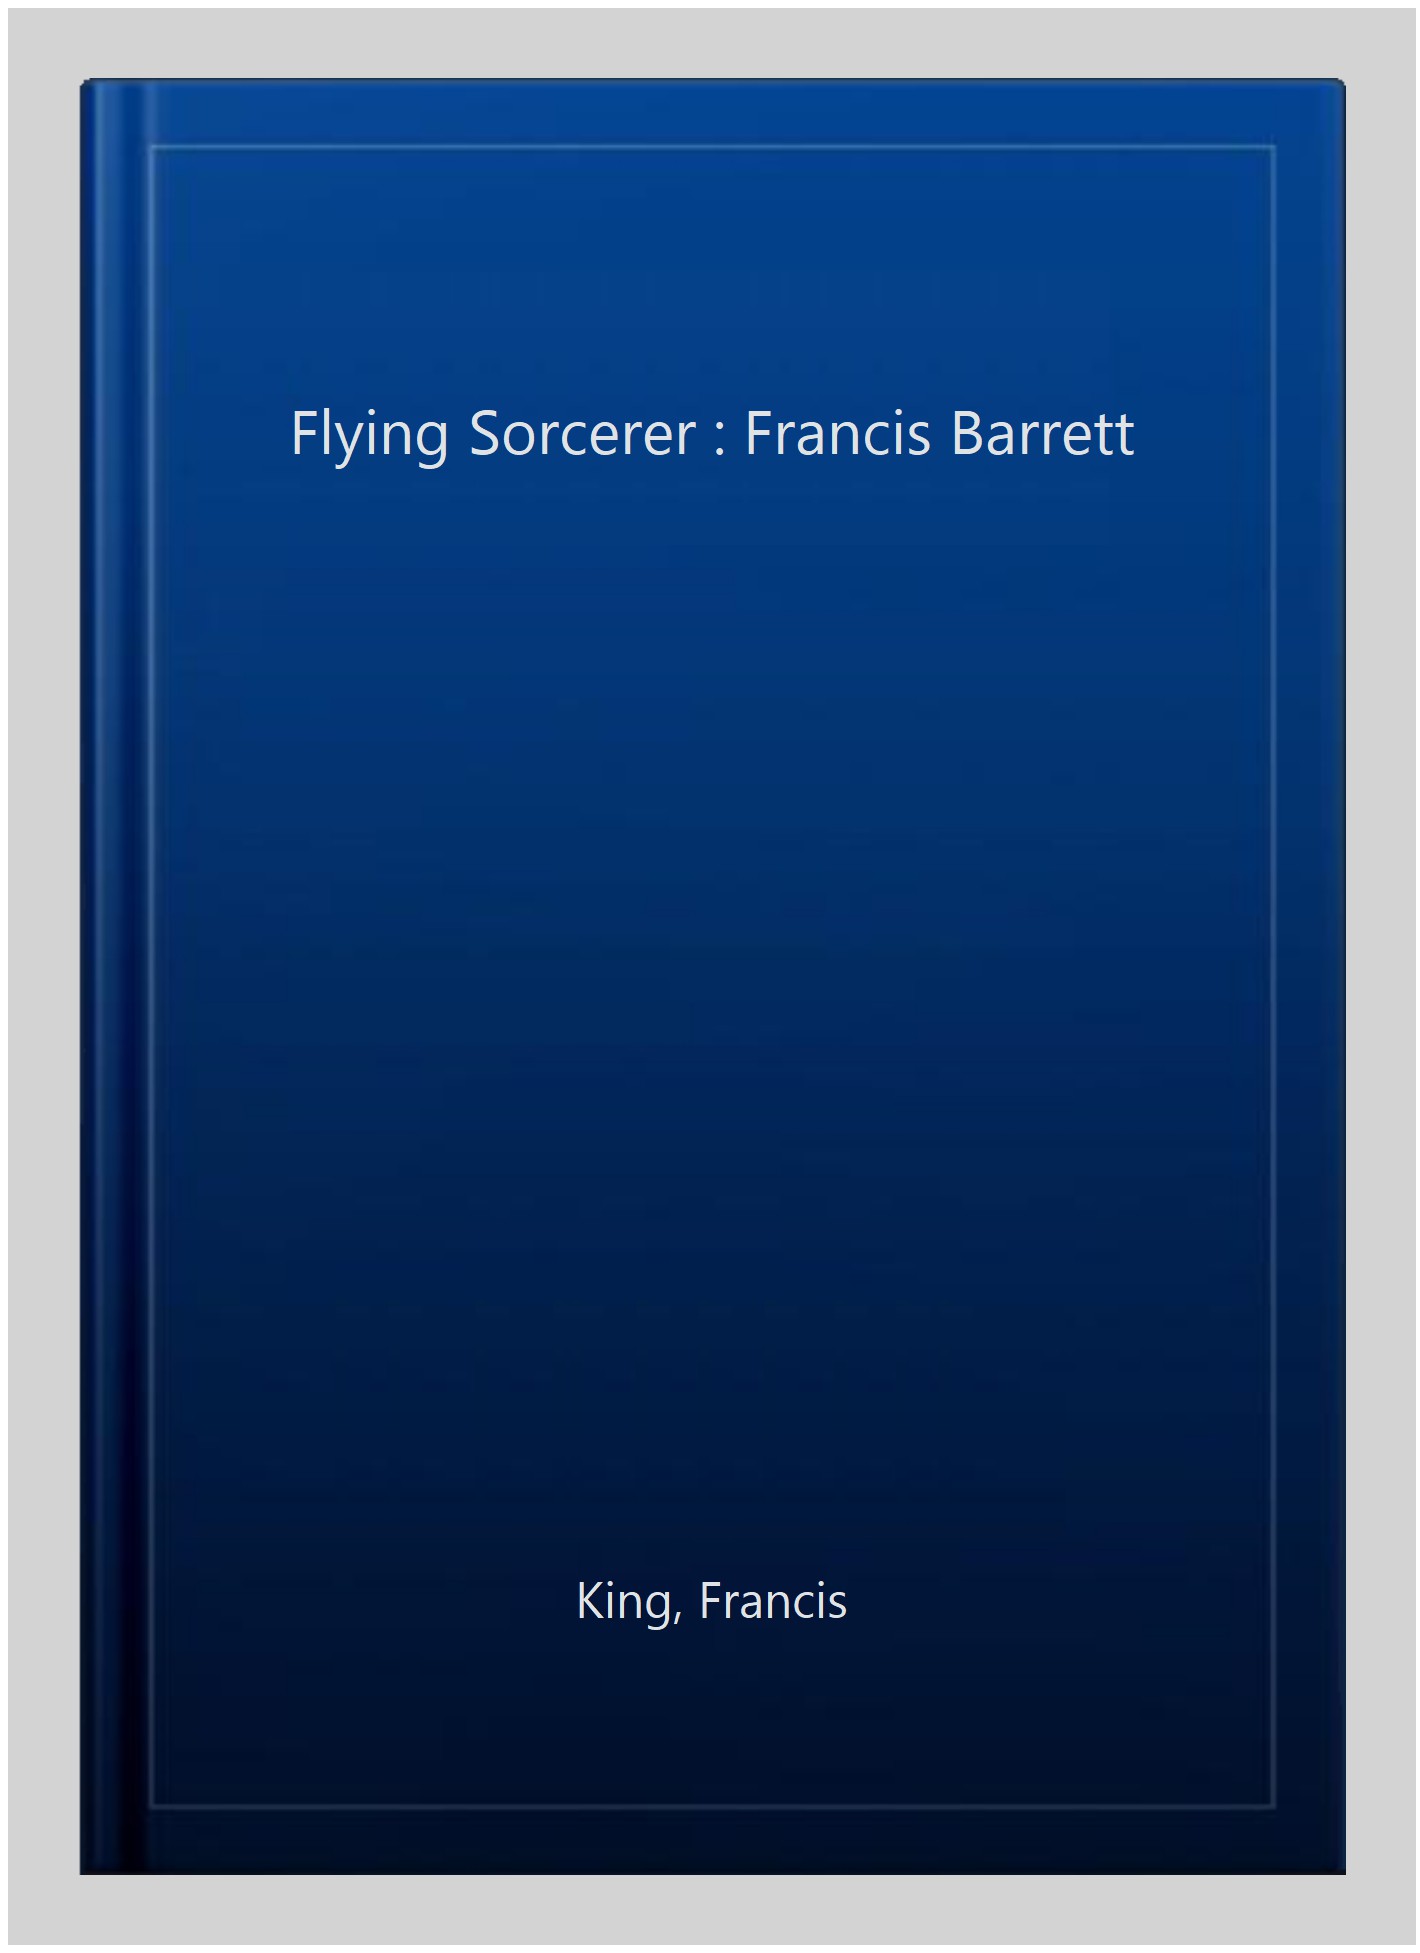 Flying Sorcerer : Francis Barrett - King, Francis